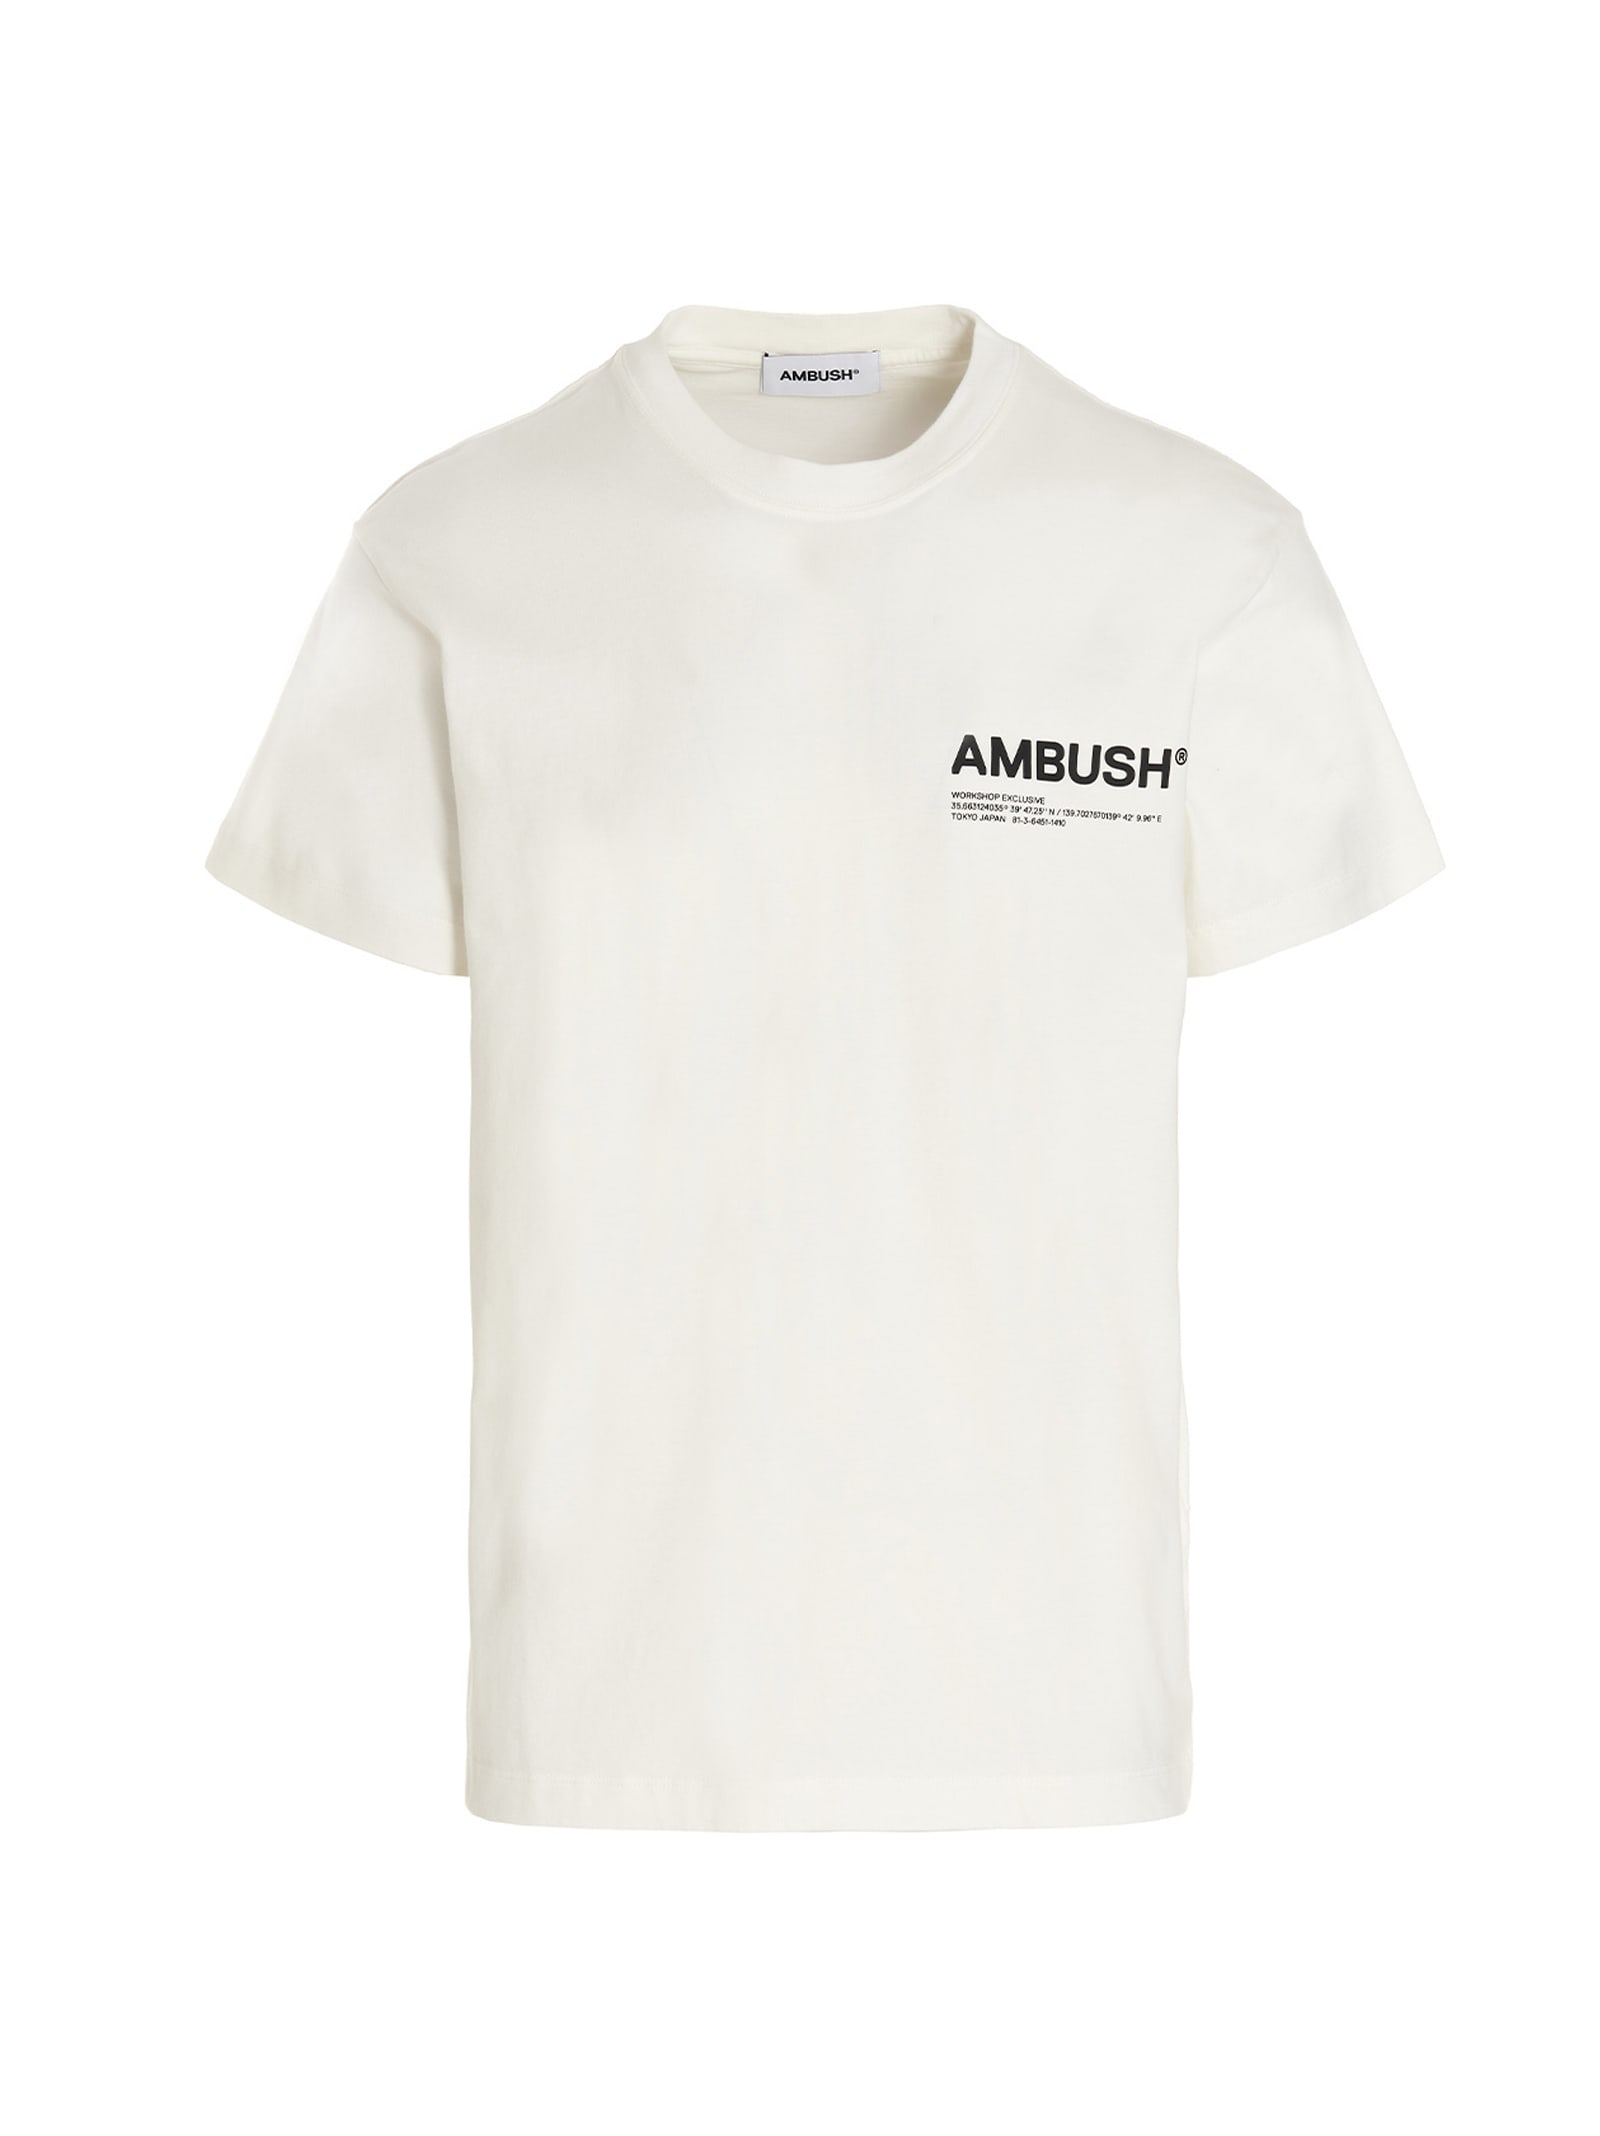 AMBUSH WORKSHOP T-SHIRT